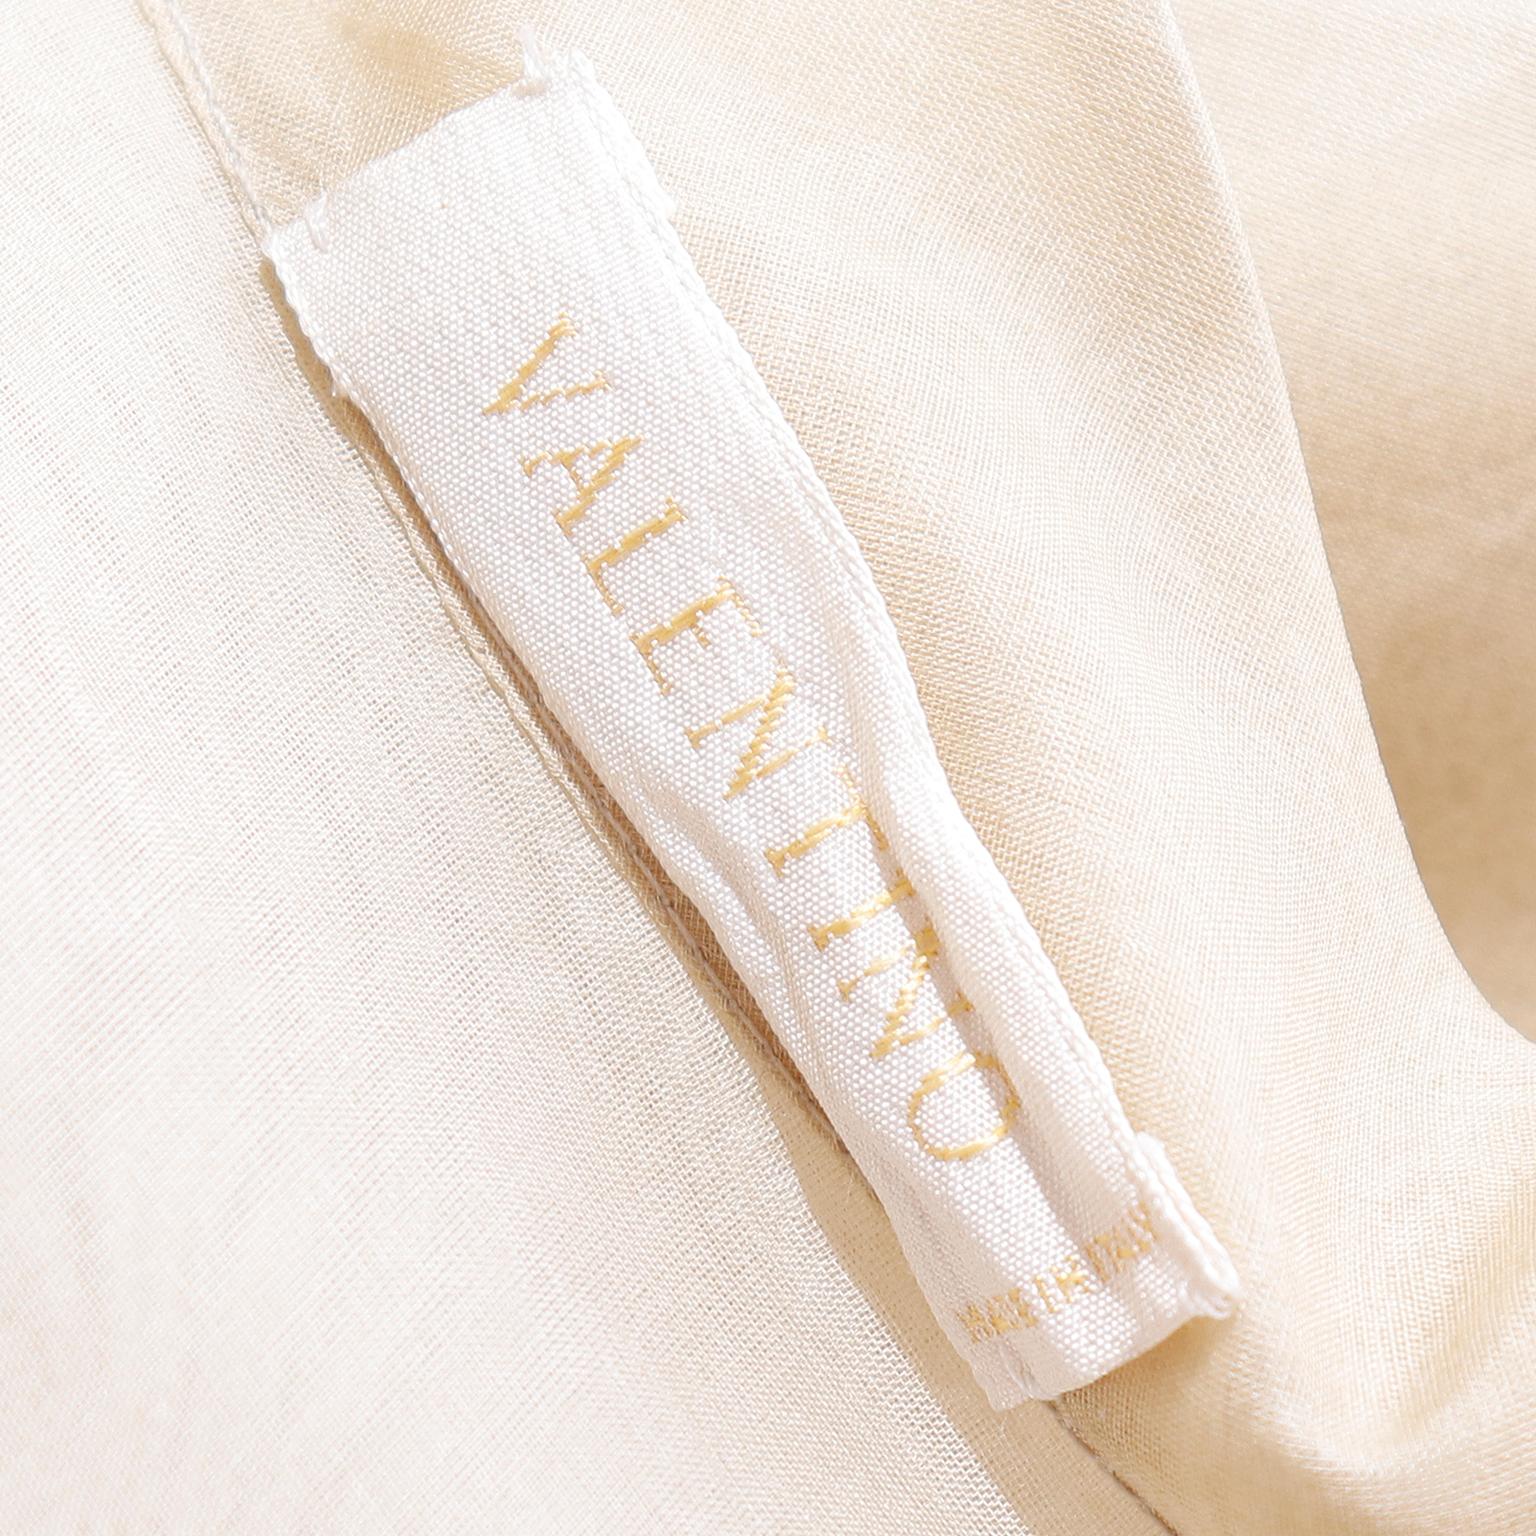 Women's Valentino Garavani 2000s Top in Soft Gold Silk Chiffon Tiered Sleeveless Blouse For Sale